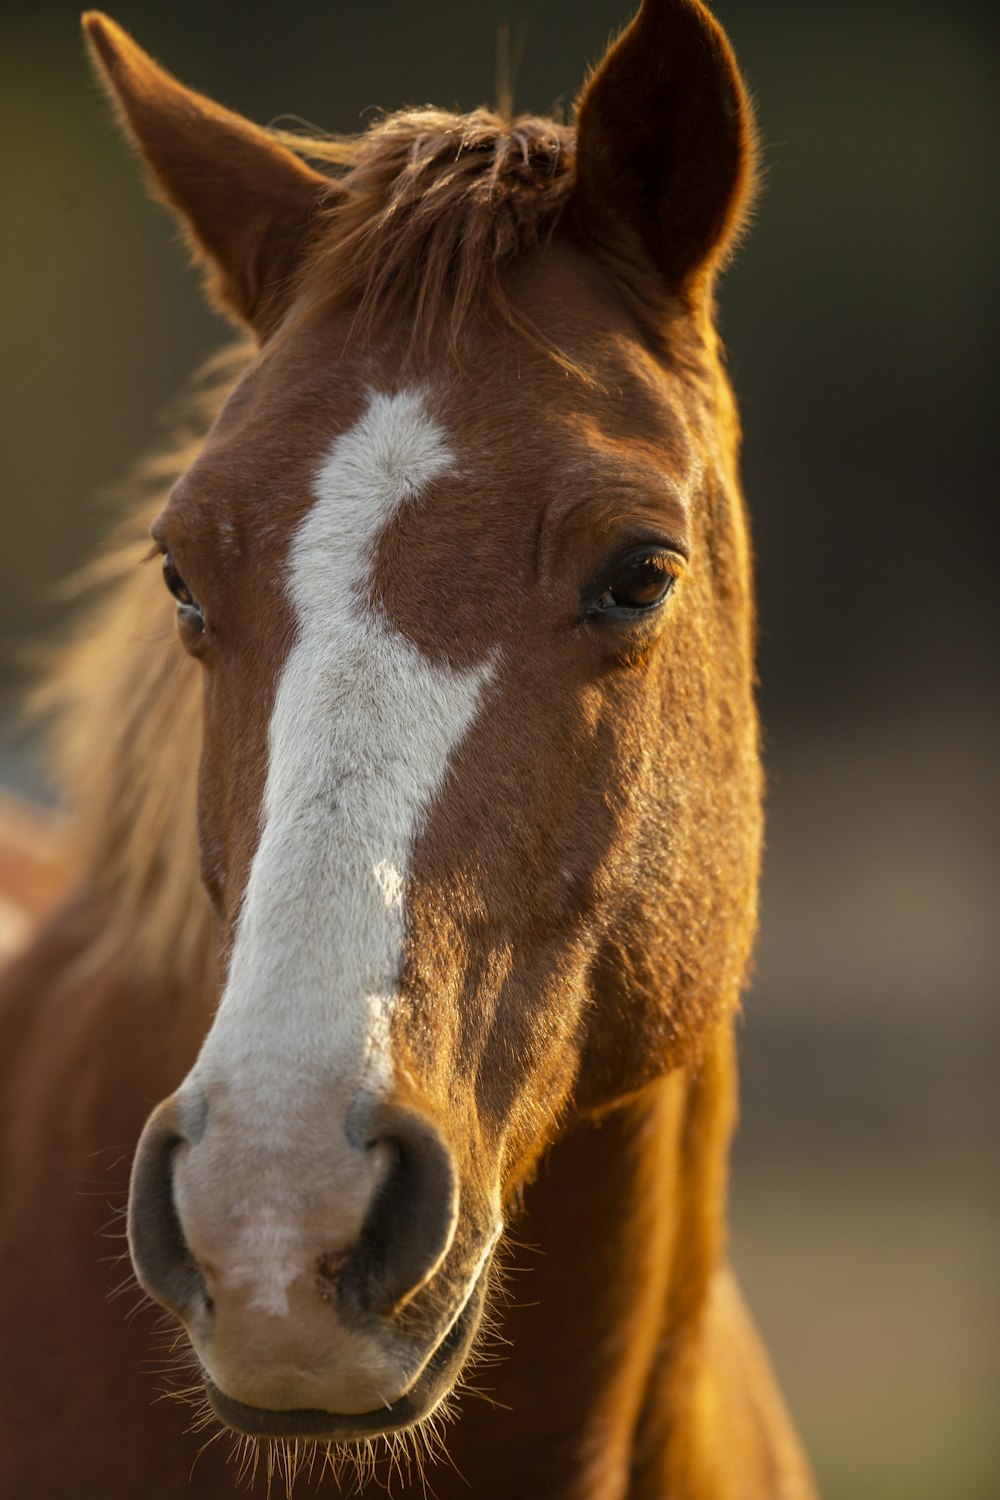 Brown horse close-up photography photo – Free Horse Image on Unsplash